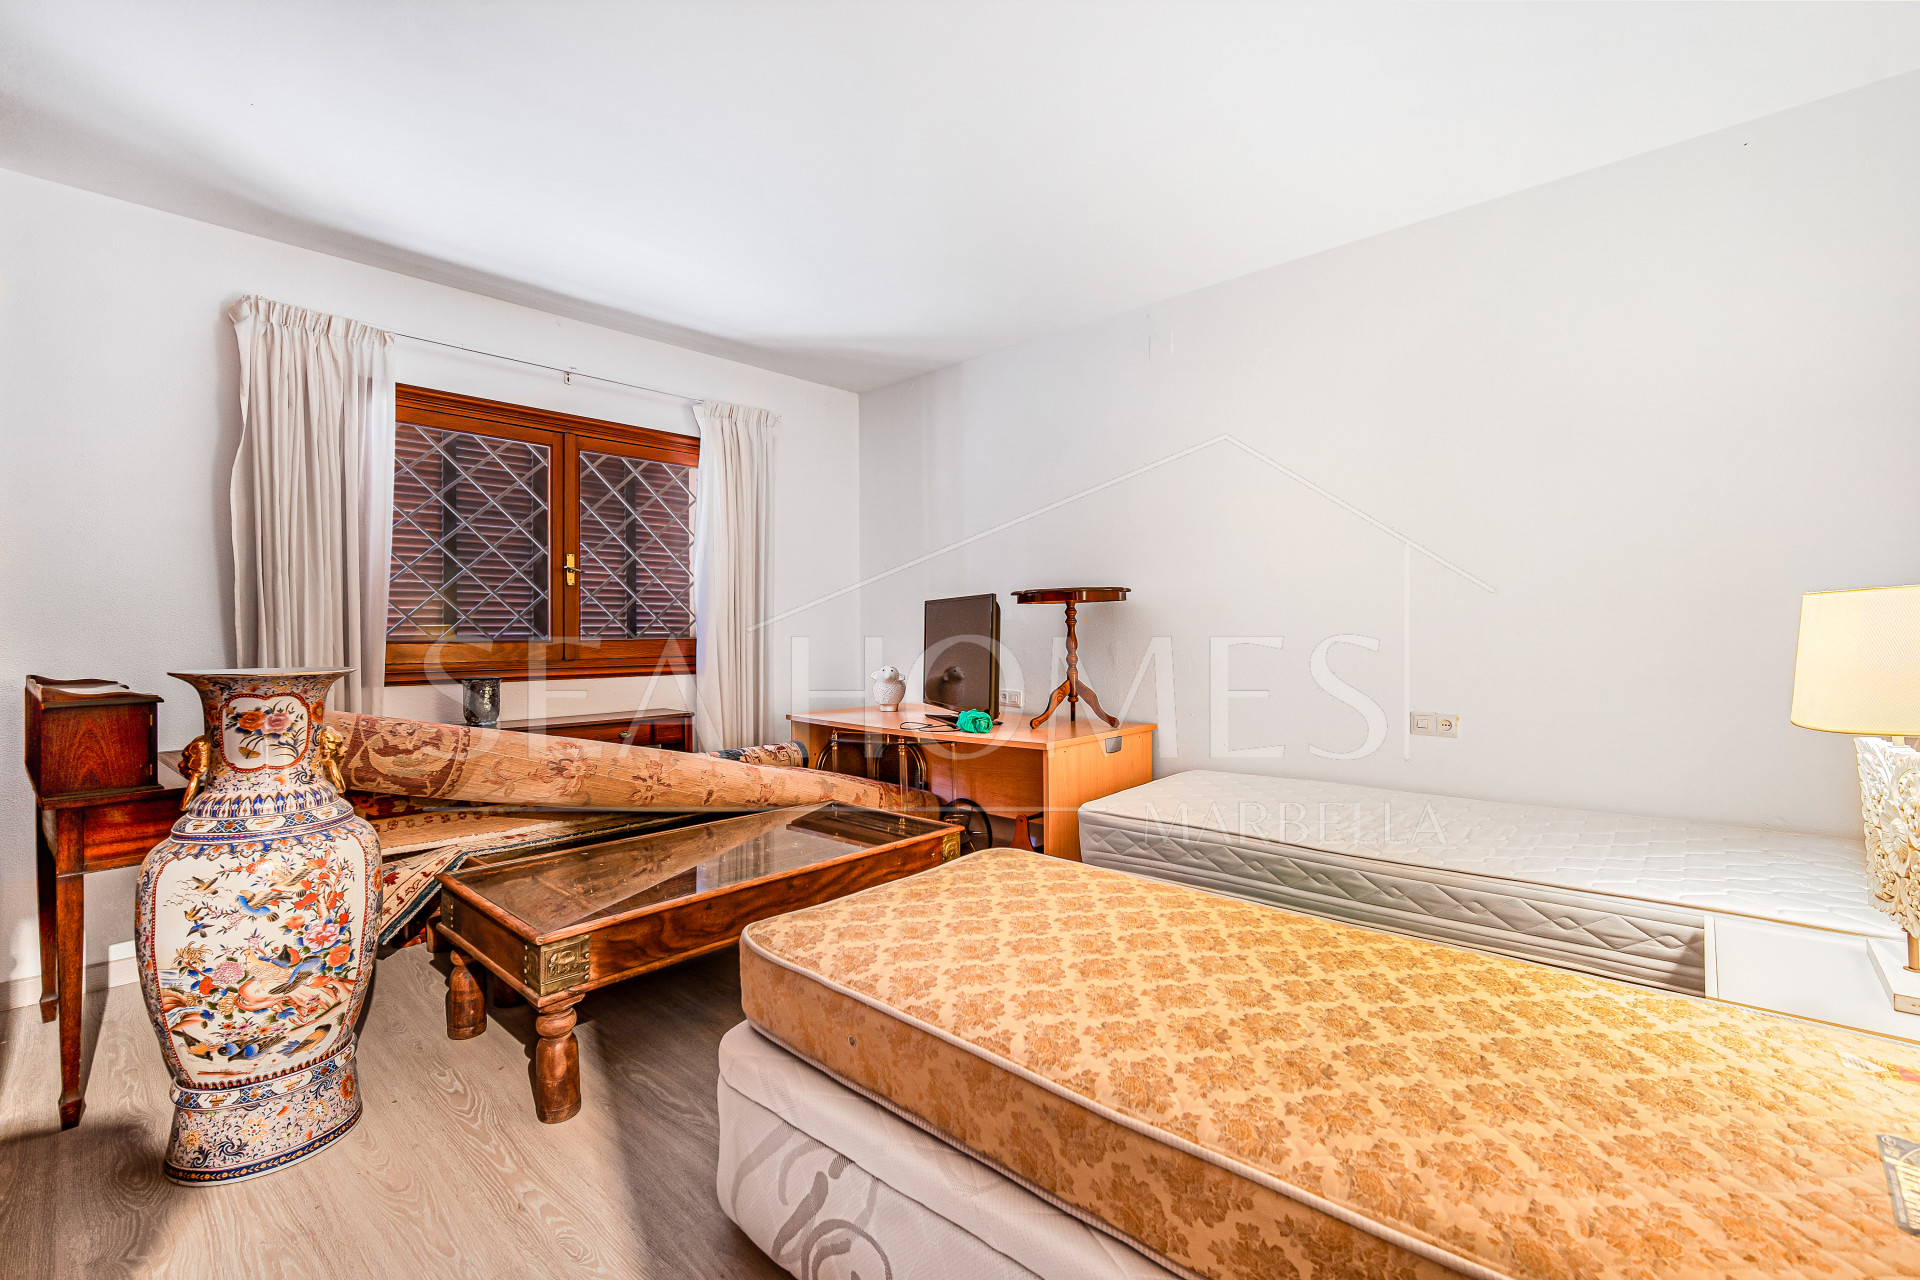 Fantastic four bedroom, east facing Villa located in Rio Real, Marbella - a great reform project